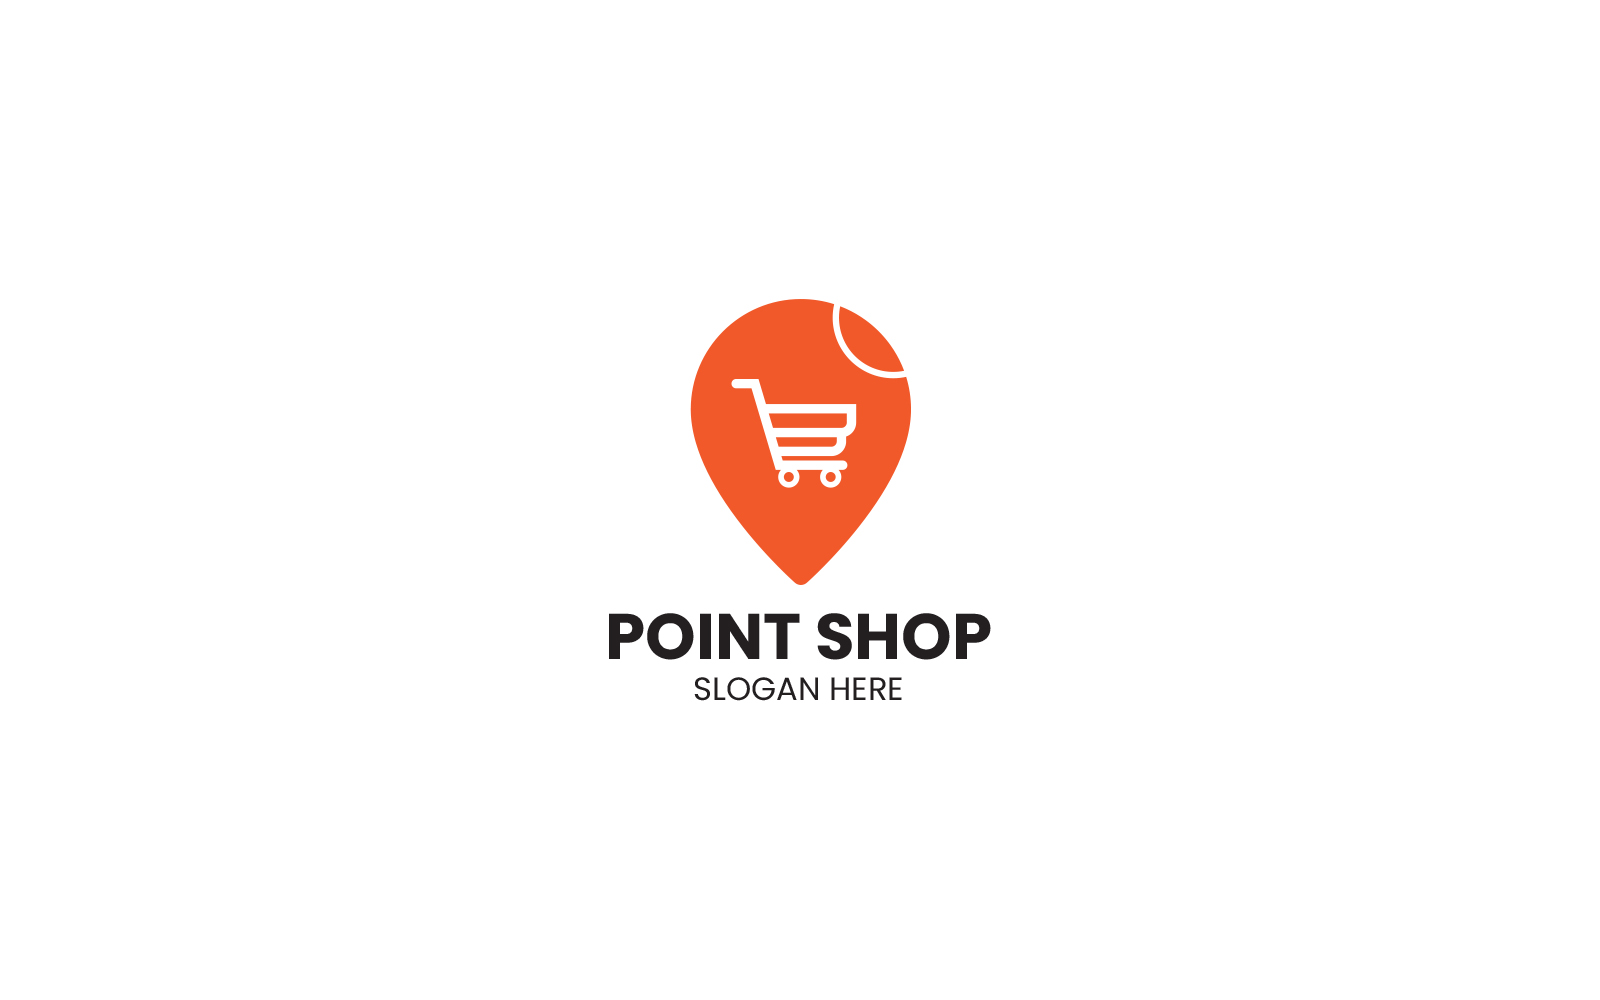 Point Shop Logo Design Template